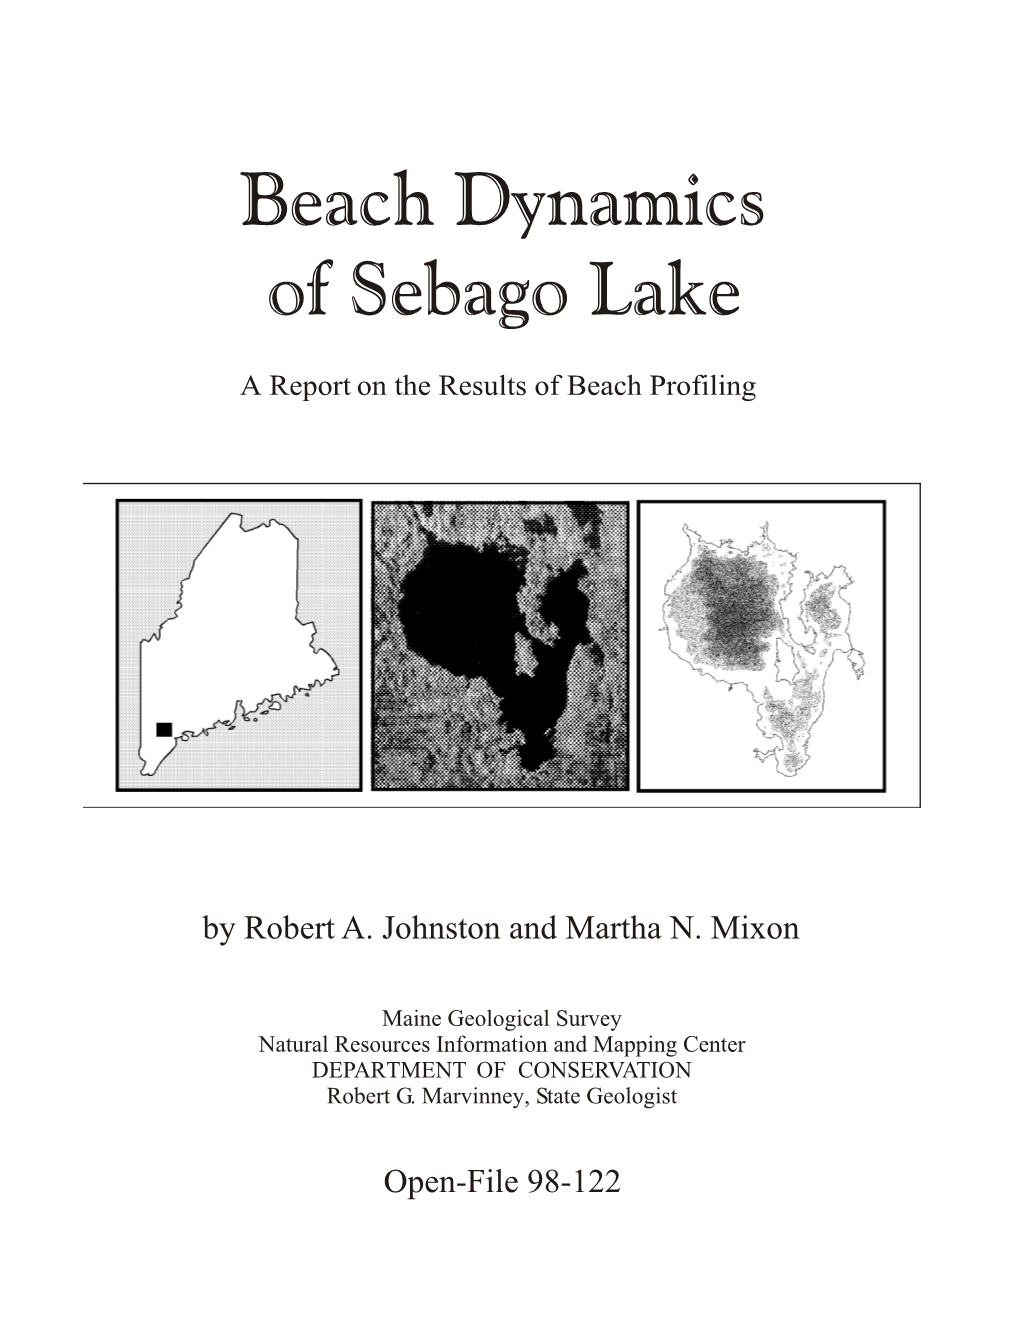 Beach Dynamics of Sebago Lake